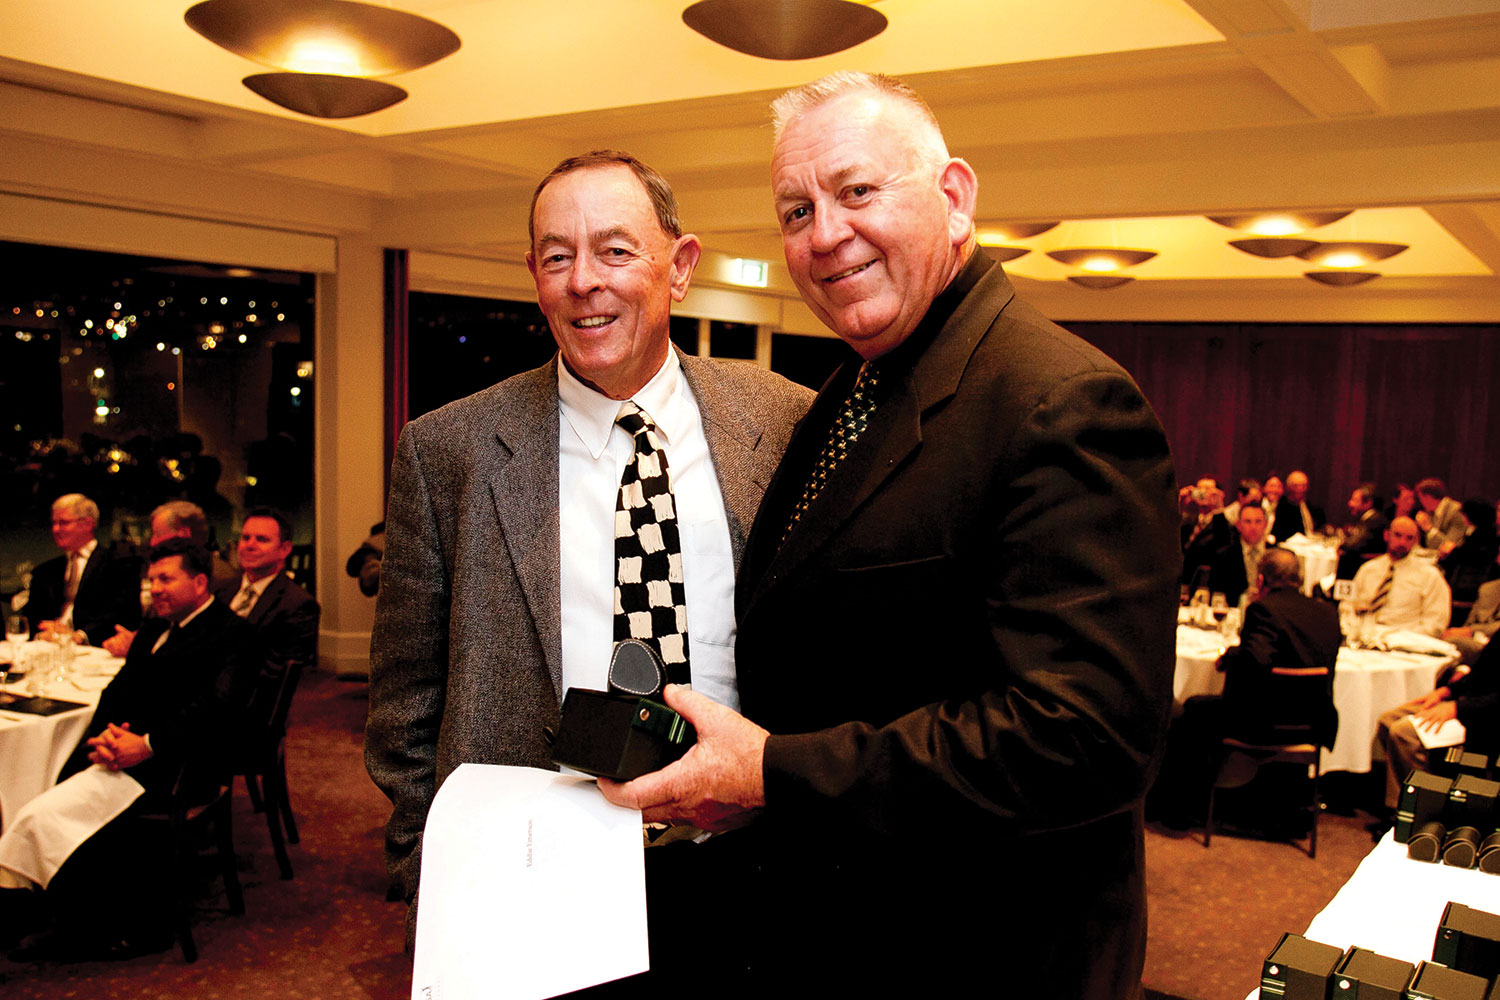 Eddie Emerson [left] is presented with his PGA of Australia Life Membership award.